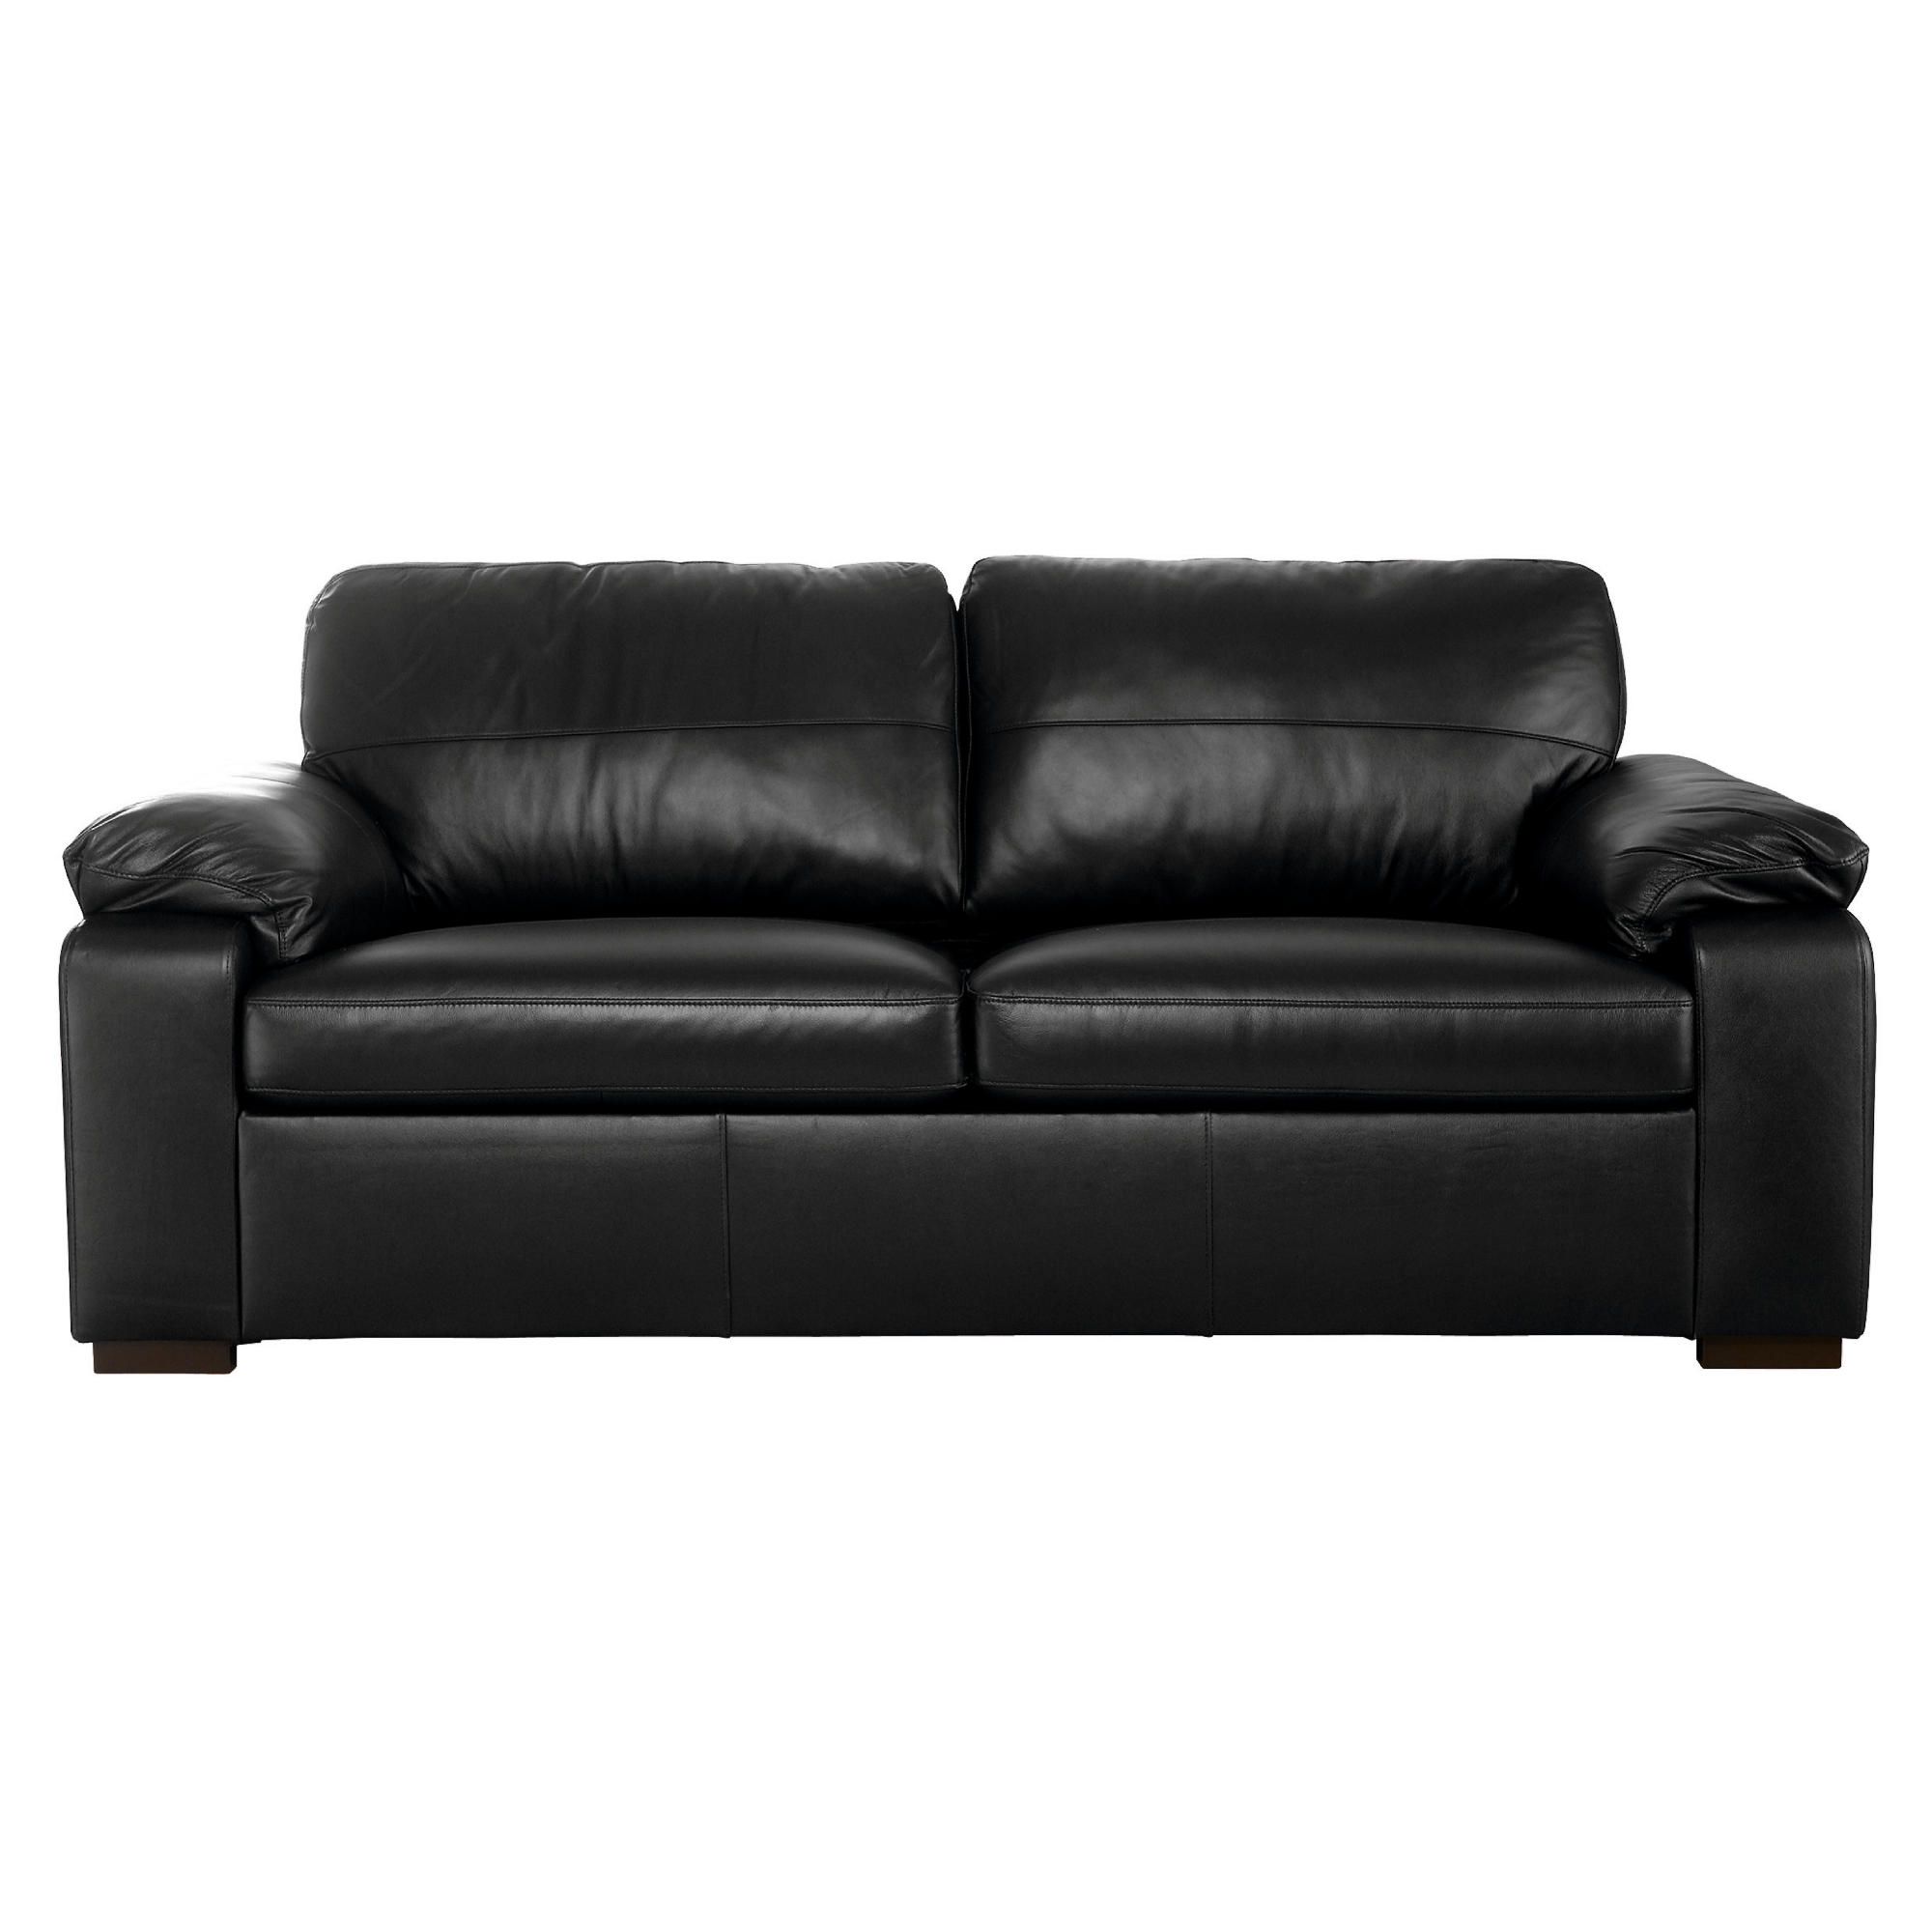 Ashmore Leather Sofa Bed, Black at Tesco Direct